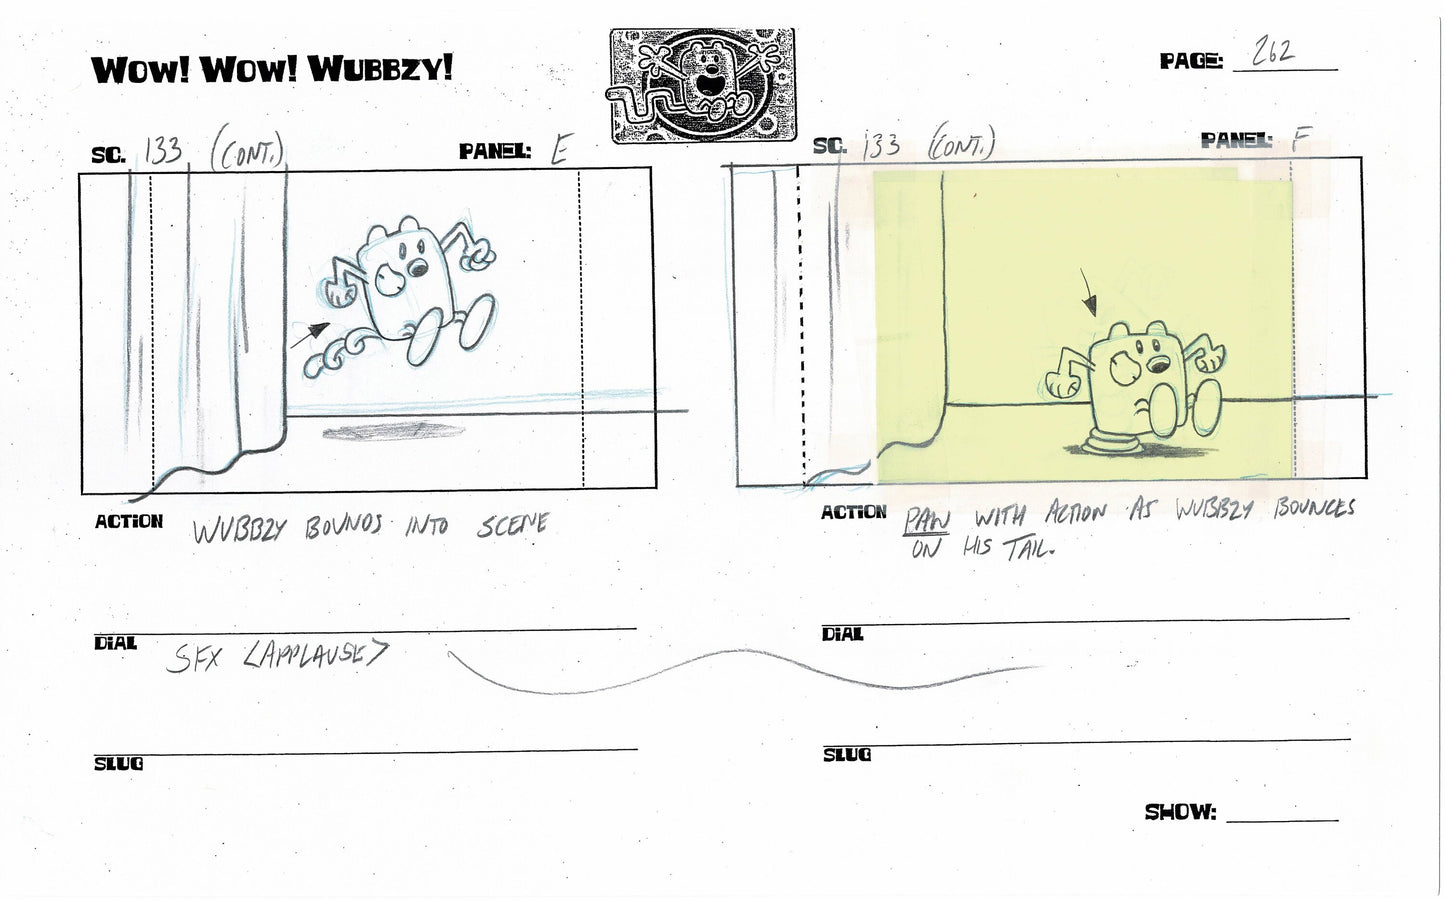 Wow! Wow! Wubbzy! Walden Original Production storyboard NICKELODEON 2006-2010 p262